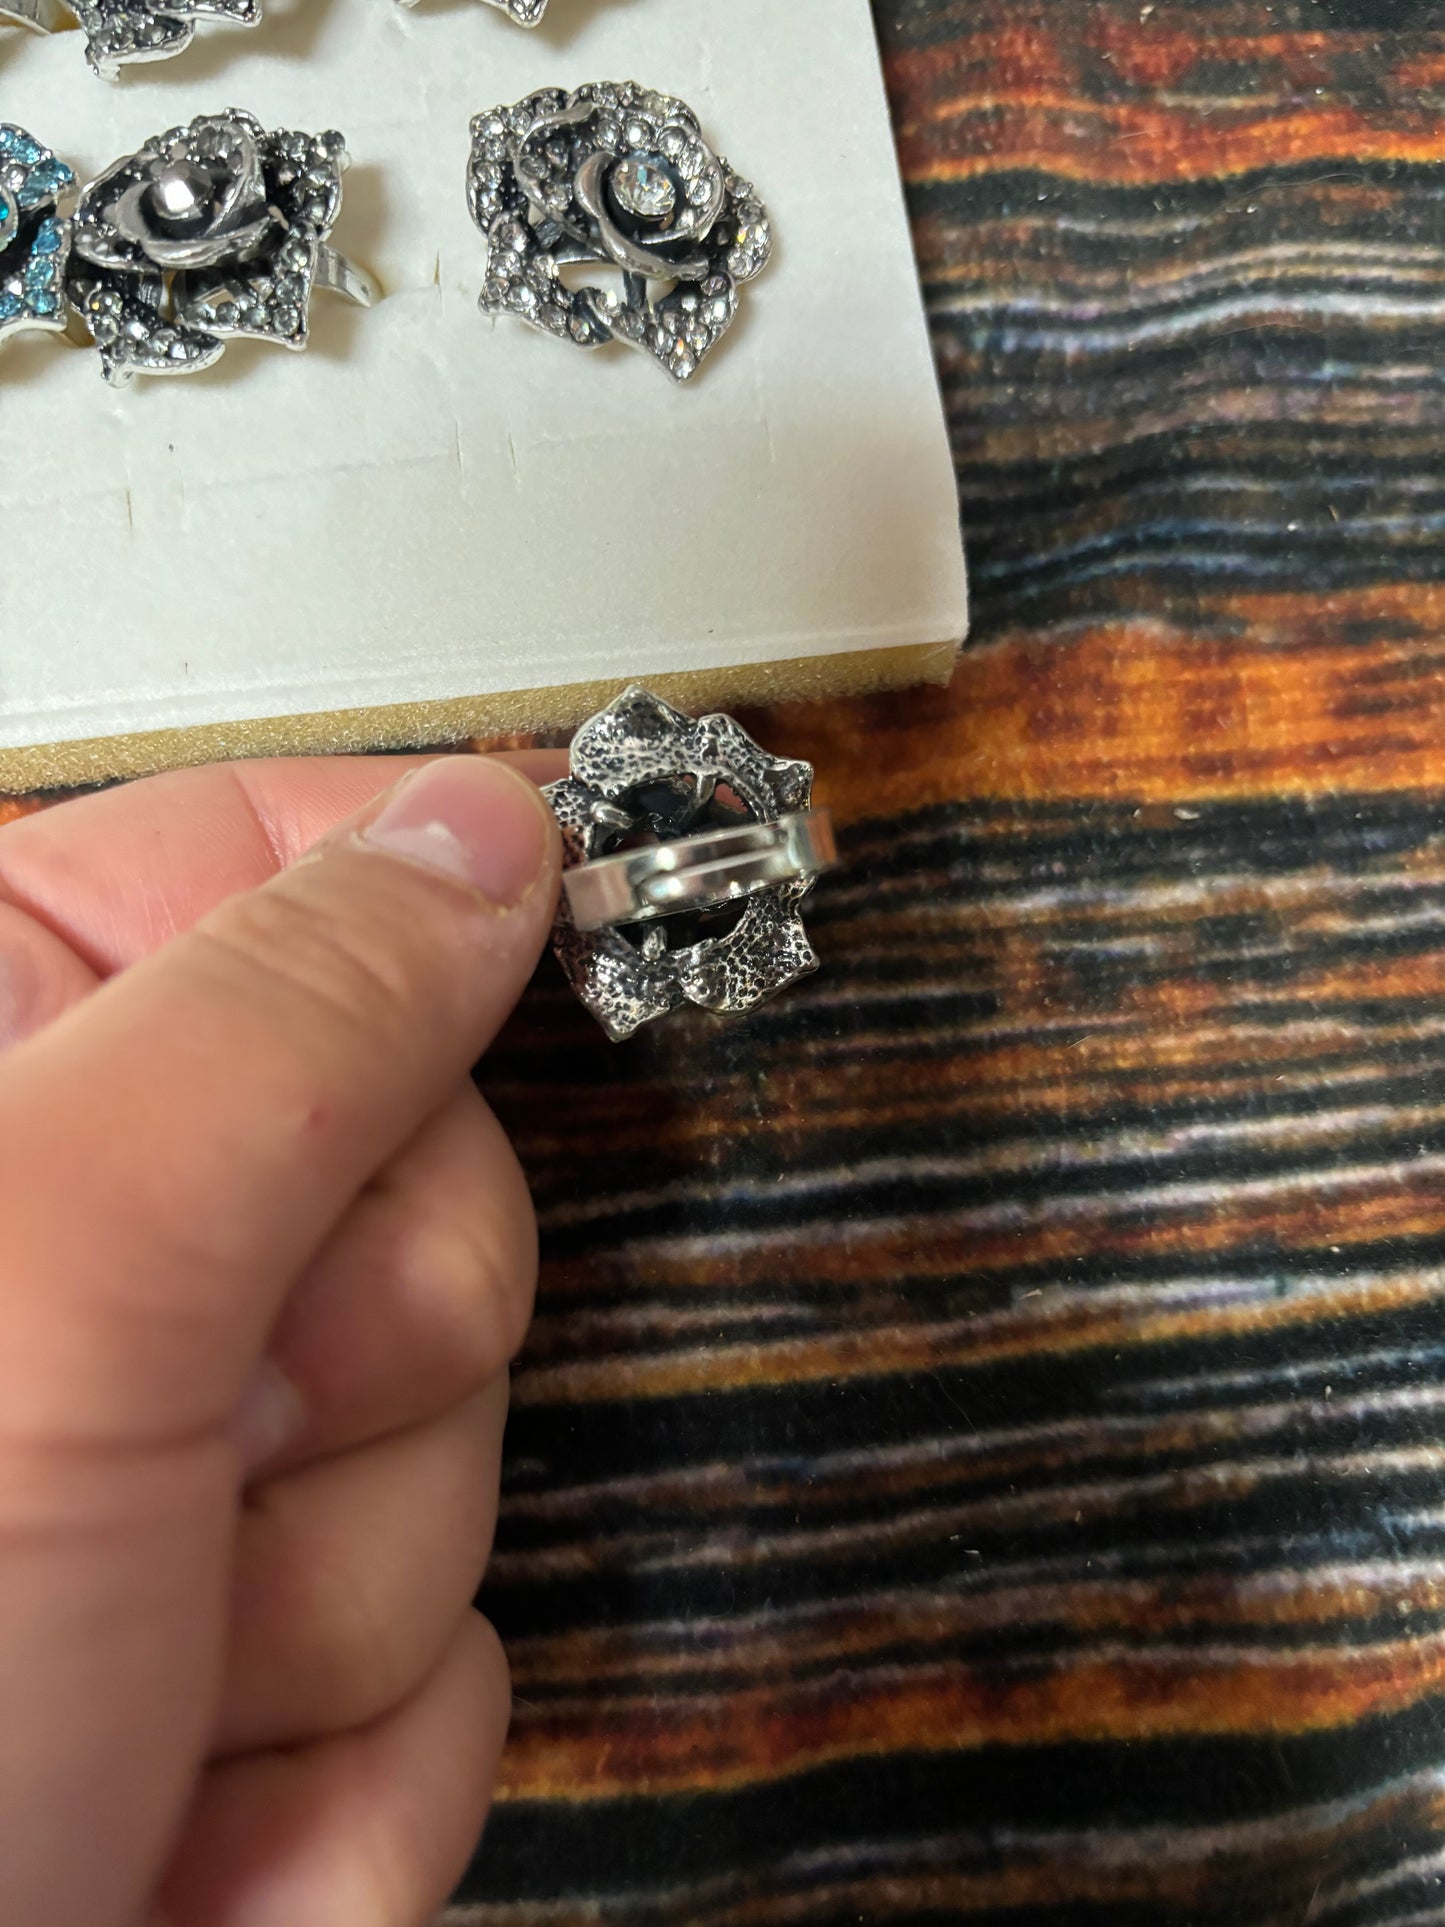 50 Adjustable Crystal Rose Ring